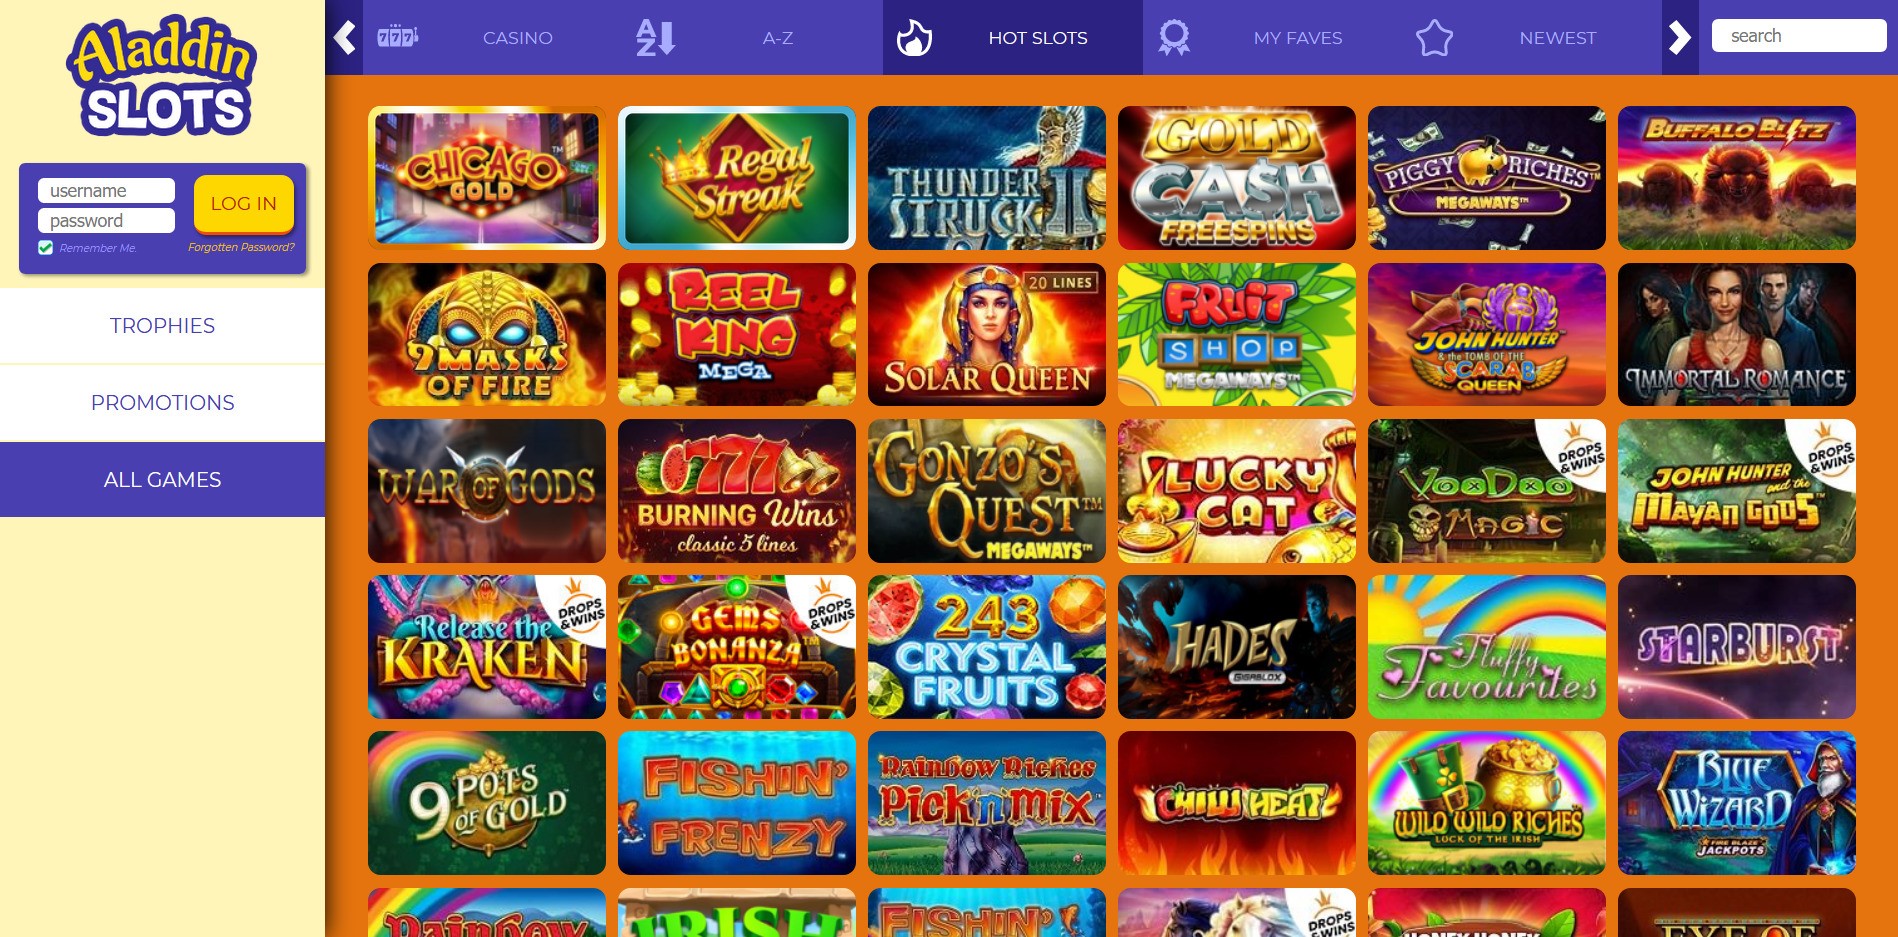 Aladdin Slots Casino Games